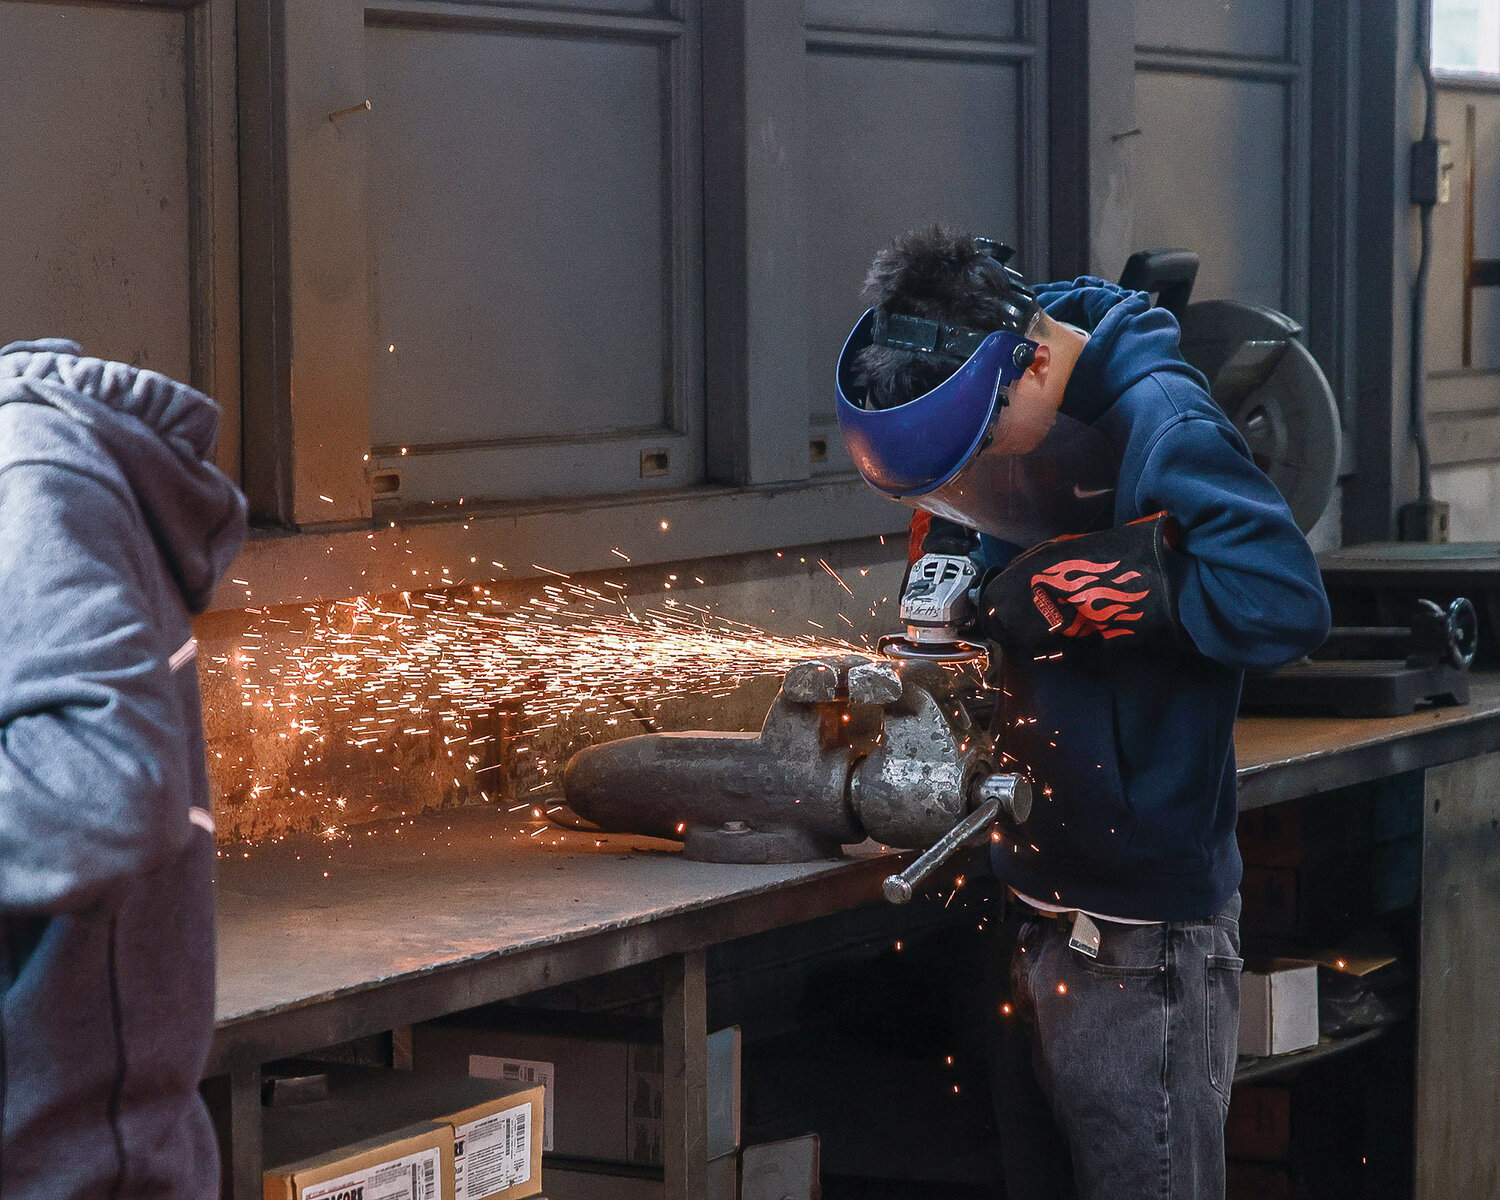 Battle Ground High School student Kainoa Ke works on a project in the welding shop on Thursday, Feb. 1.